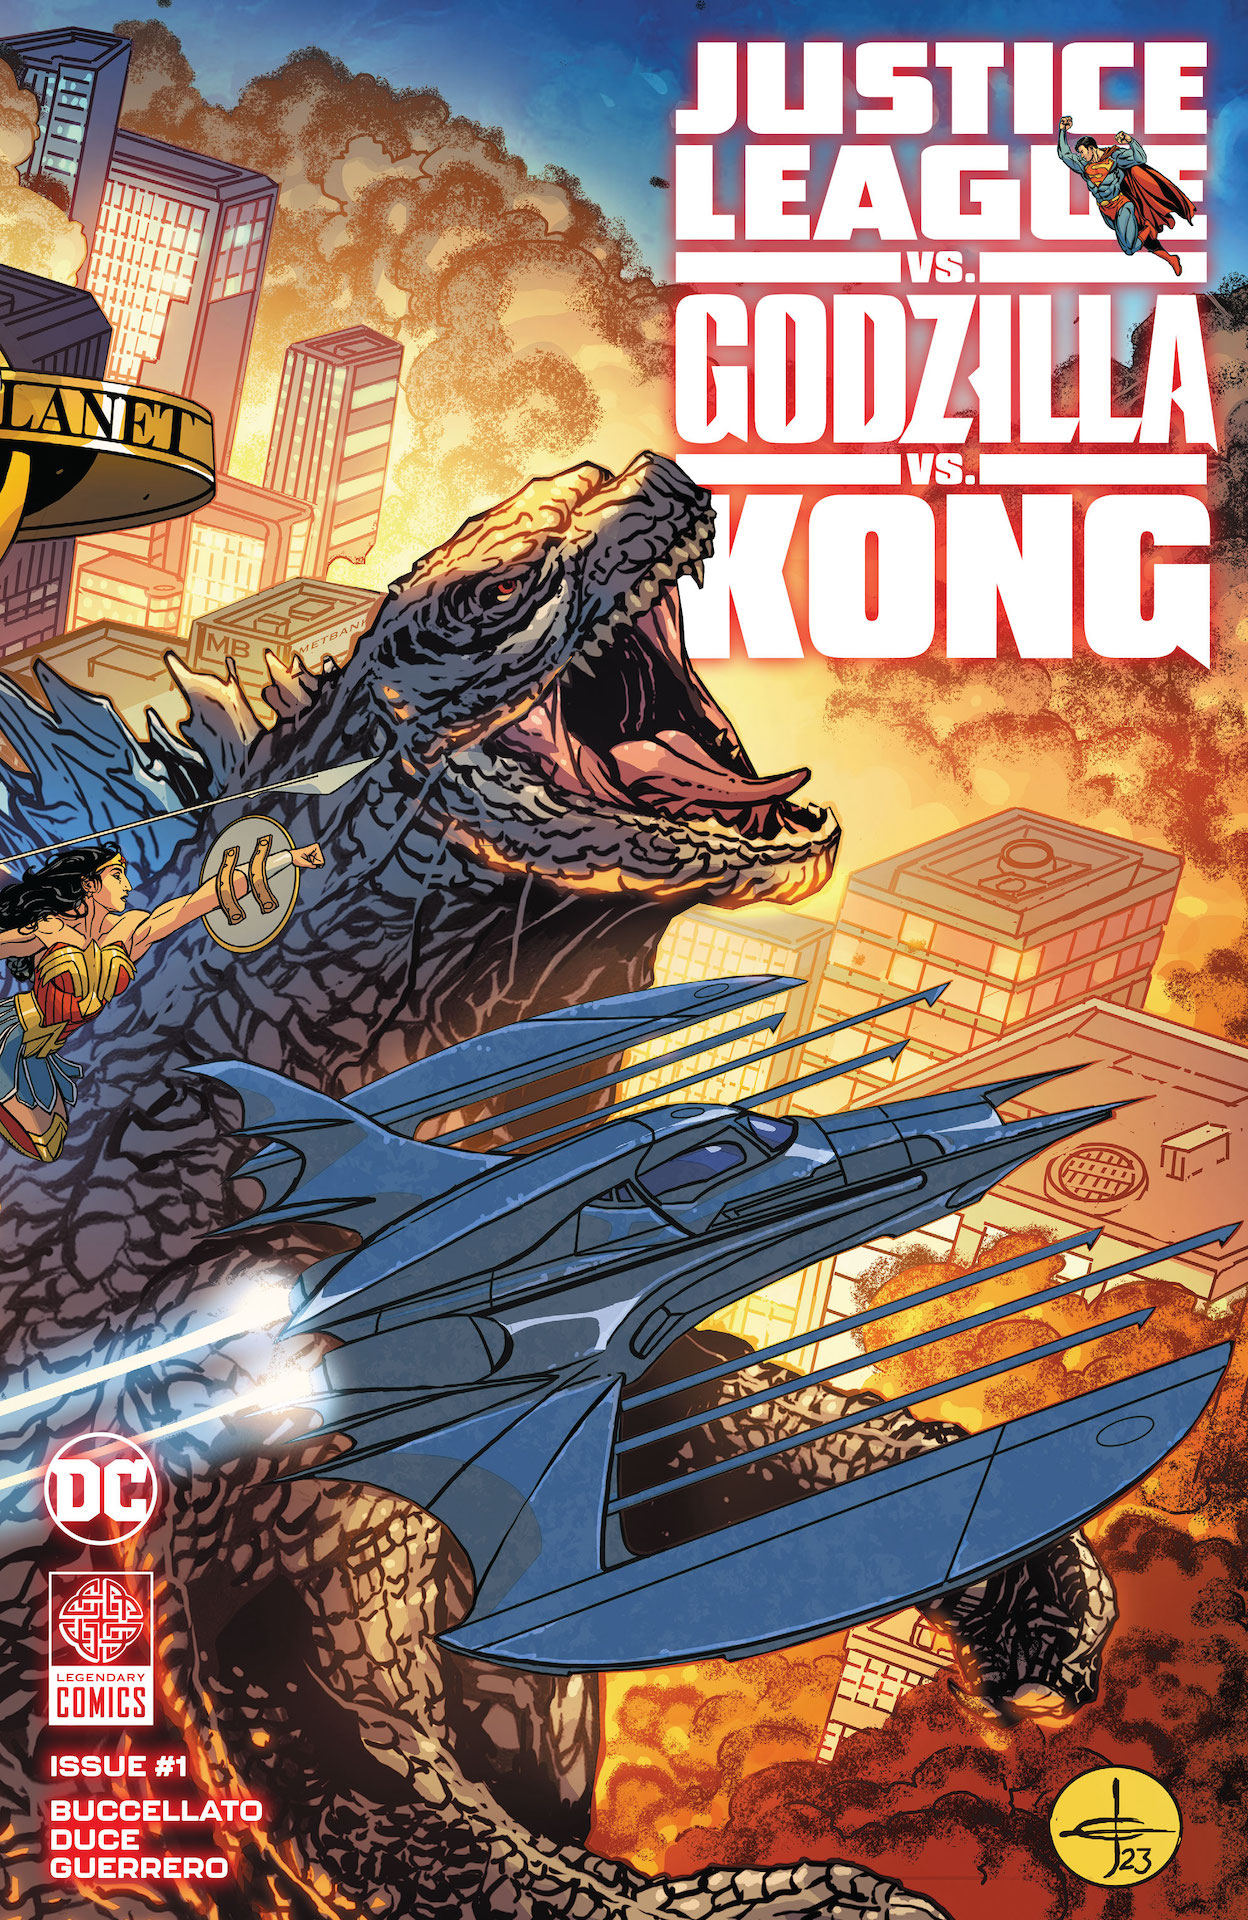 DC Preview: Justice League vs. Godzilla vs. Kong #1